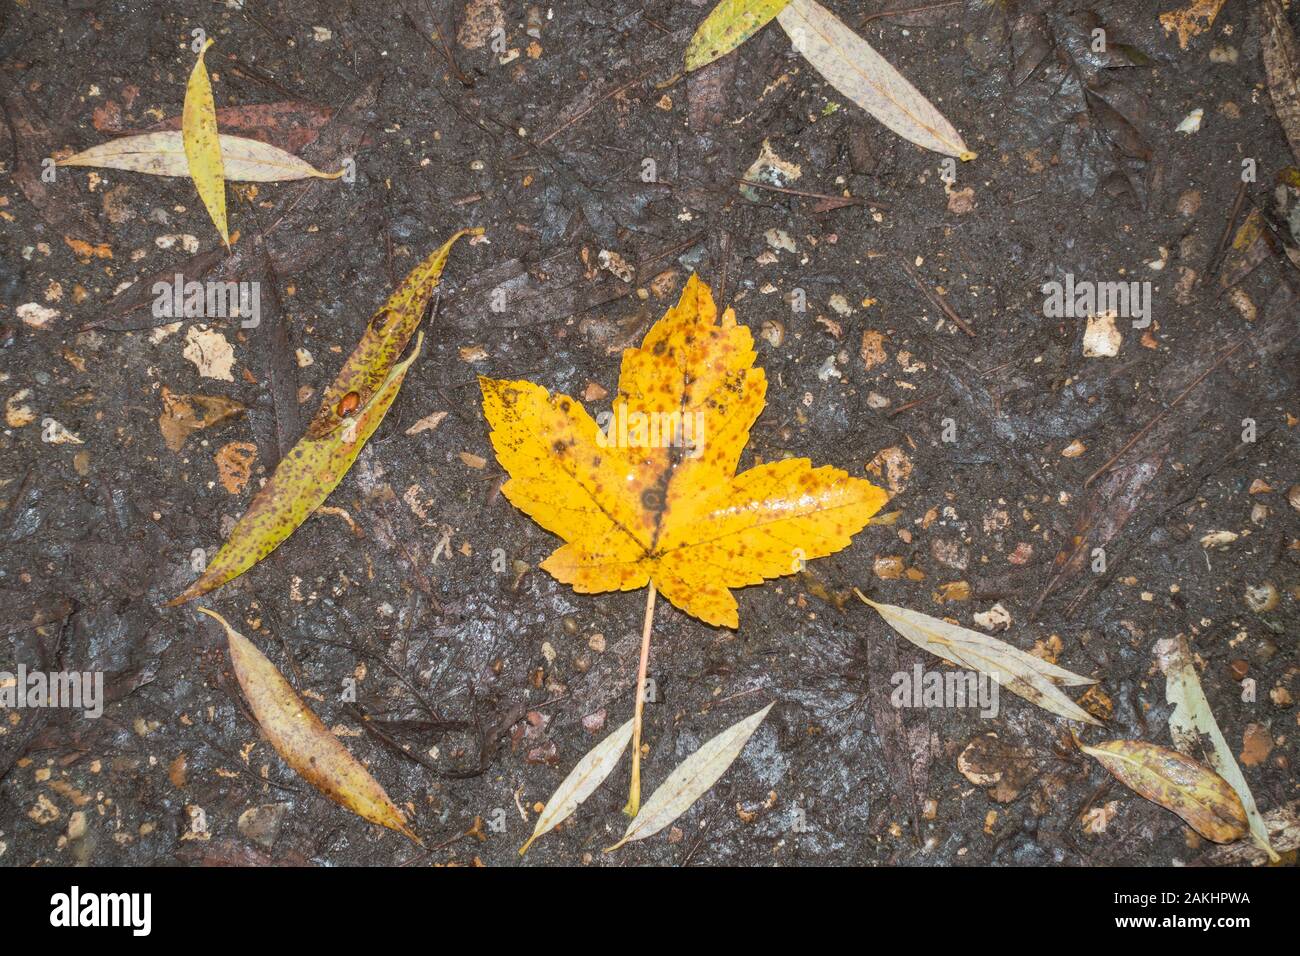 Fallen Poplar tree leaf in autumn colour autumn 2019 Stock Photo